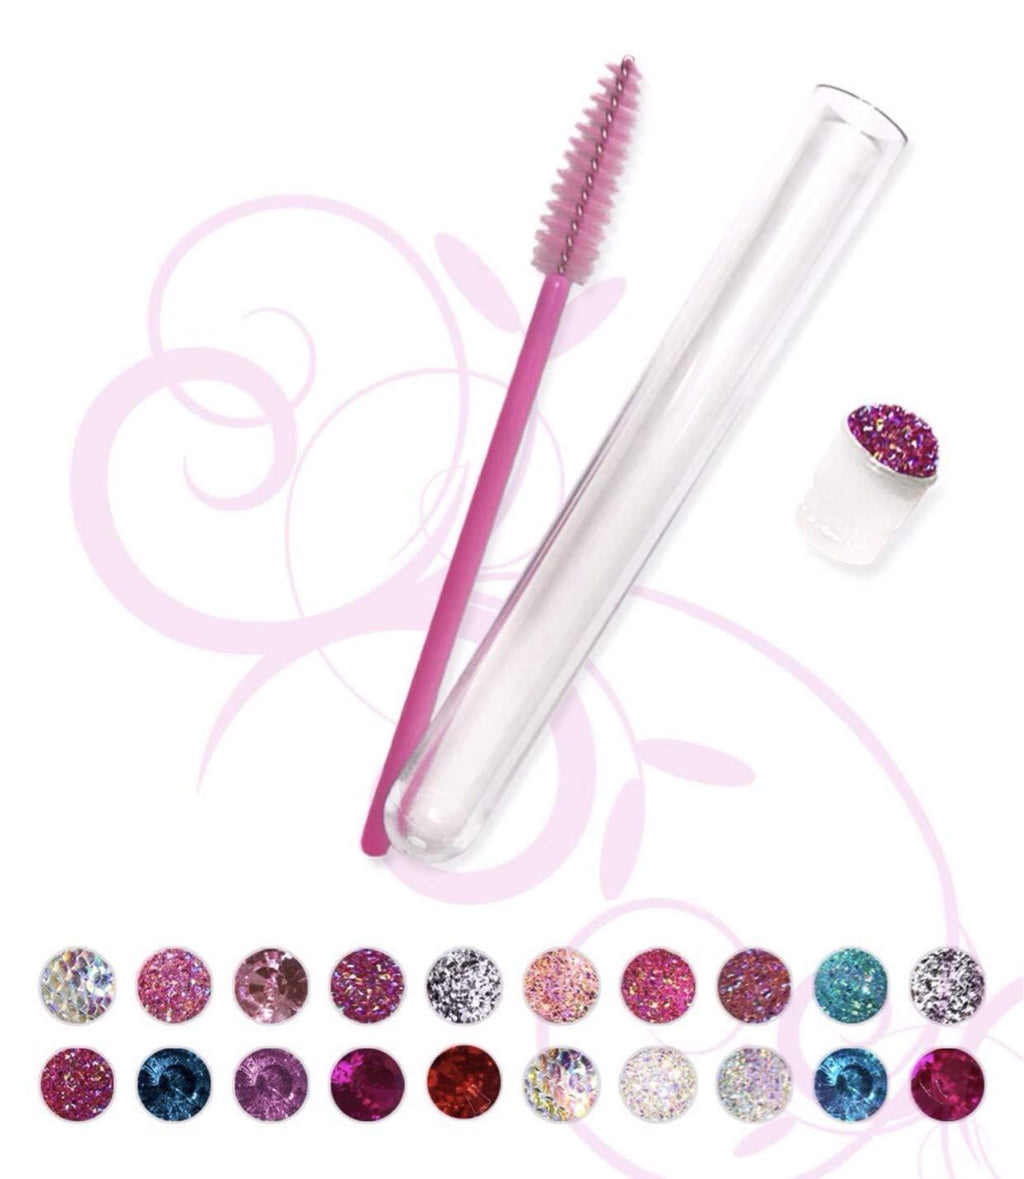 [Australia] - Eyelash brush - 20 pcs disposable eye lash wand and comb applicator in a tube - Make up tool for eyelash extension supplies (Mix-20pcs) Mix-20pcs 